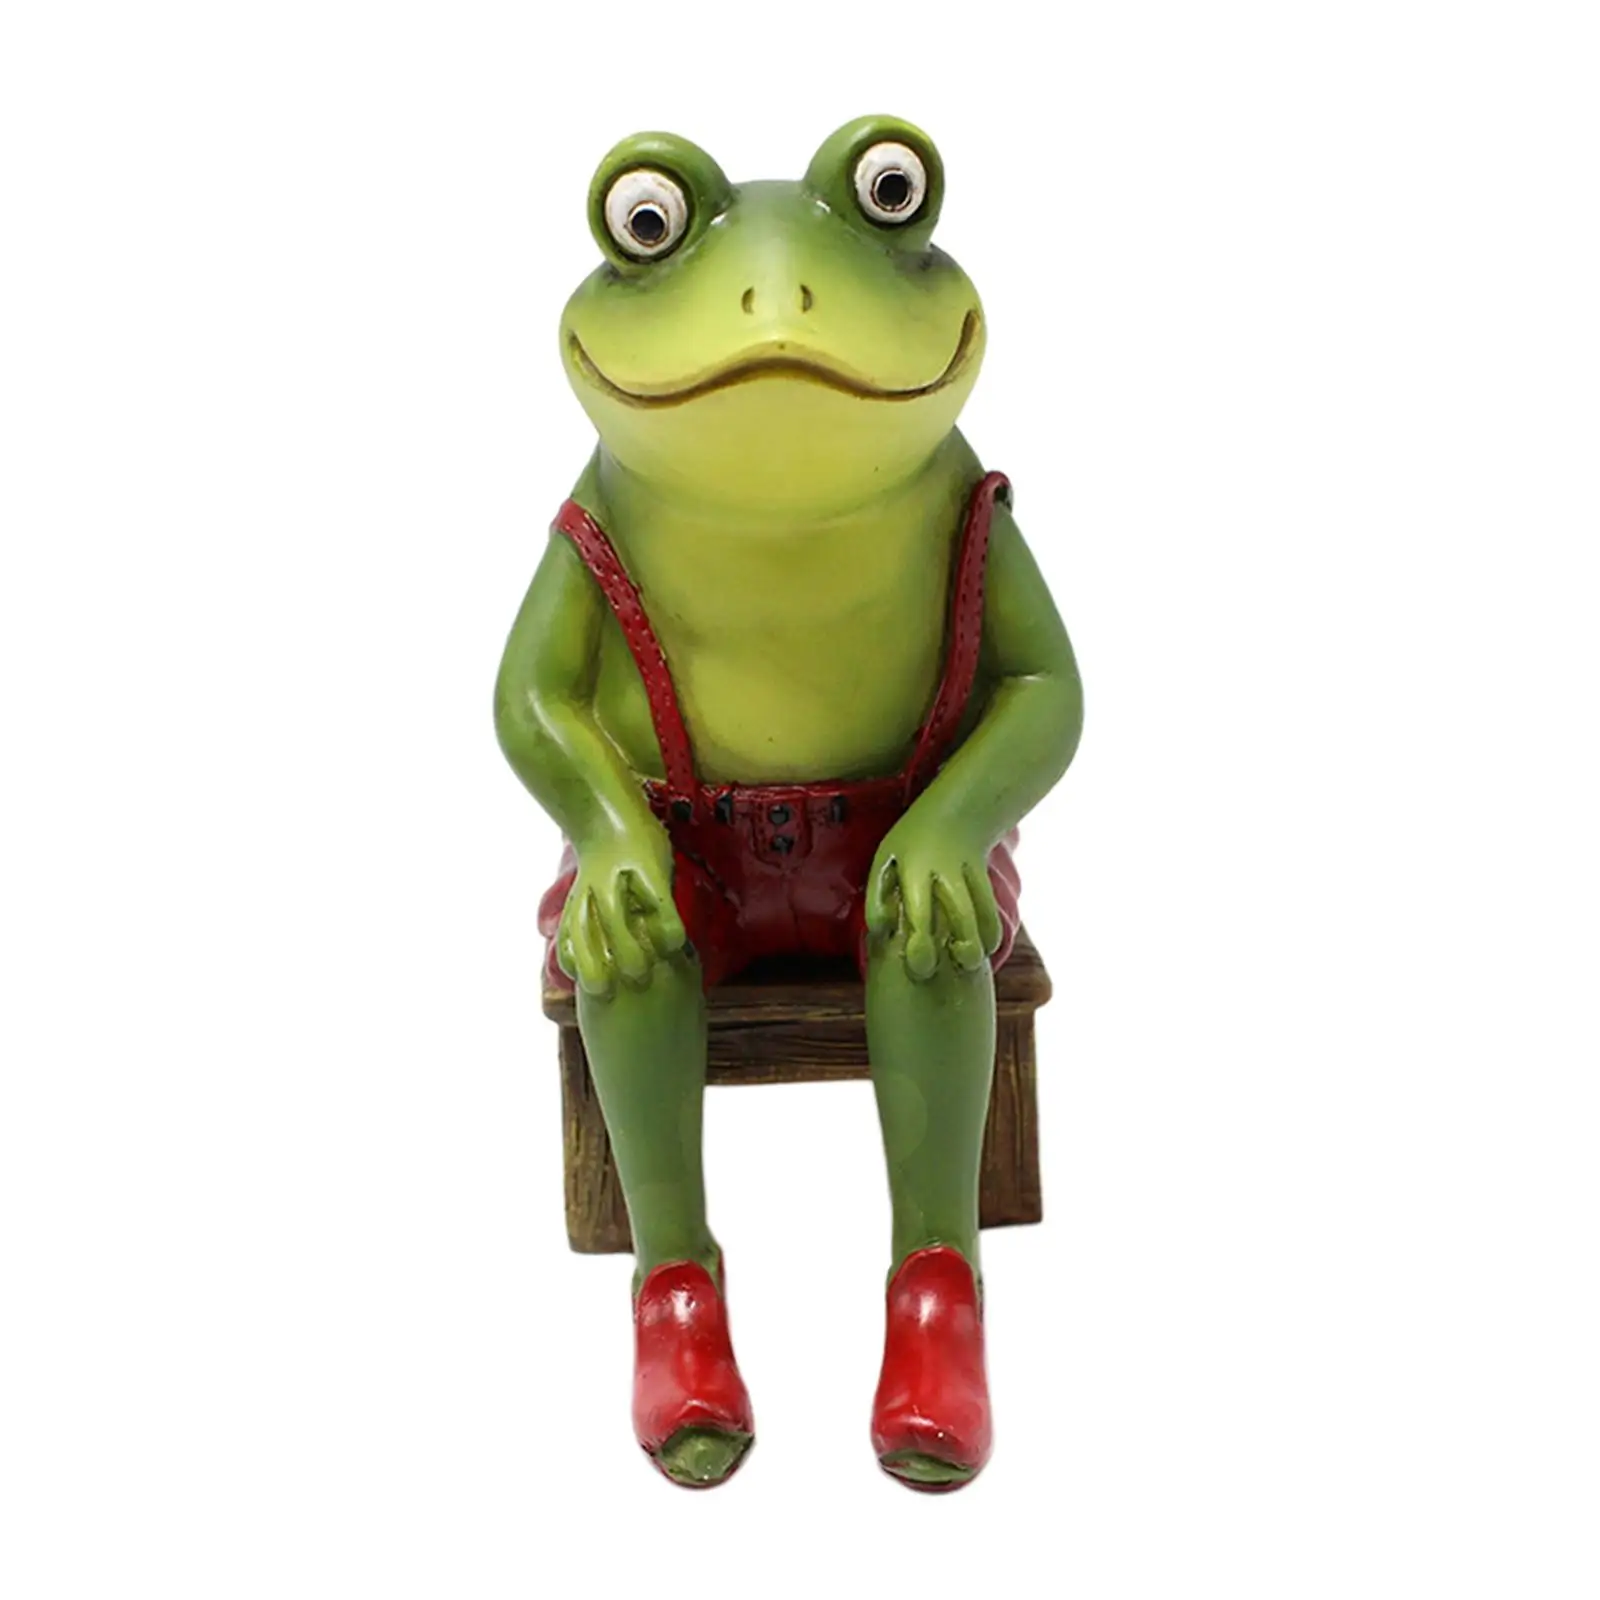 Frog Figurine Collectible Statue Model for Office Garden Desktop